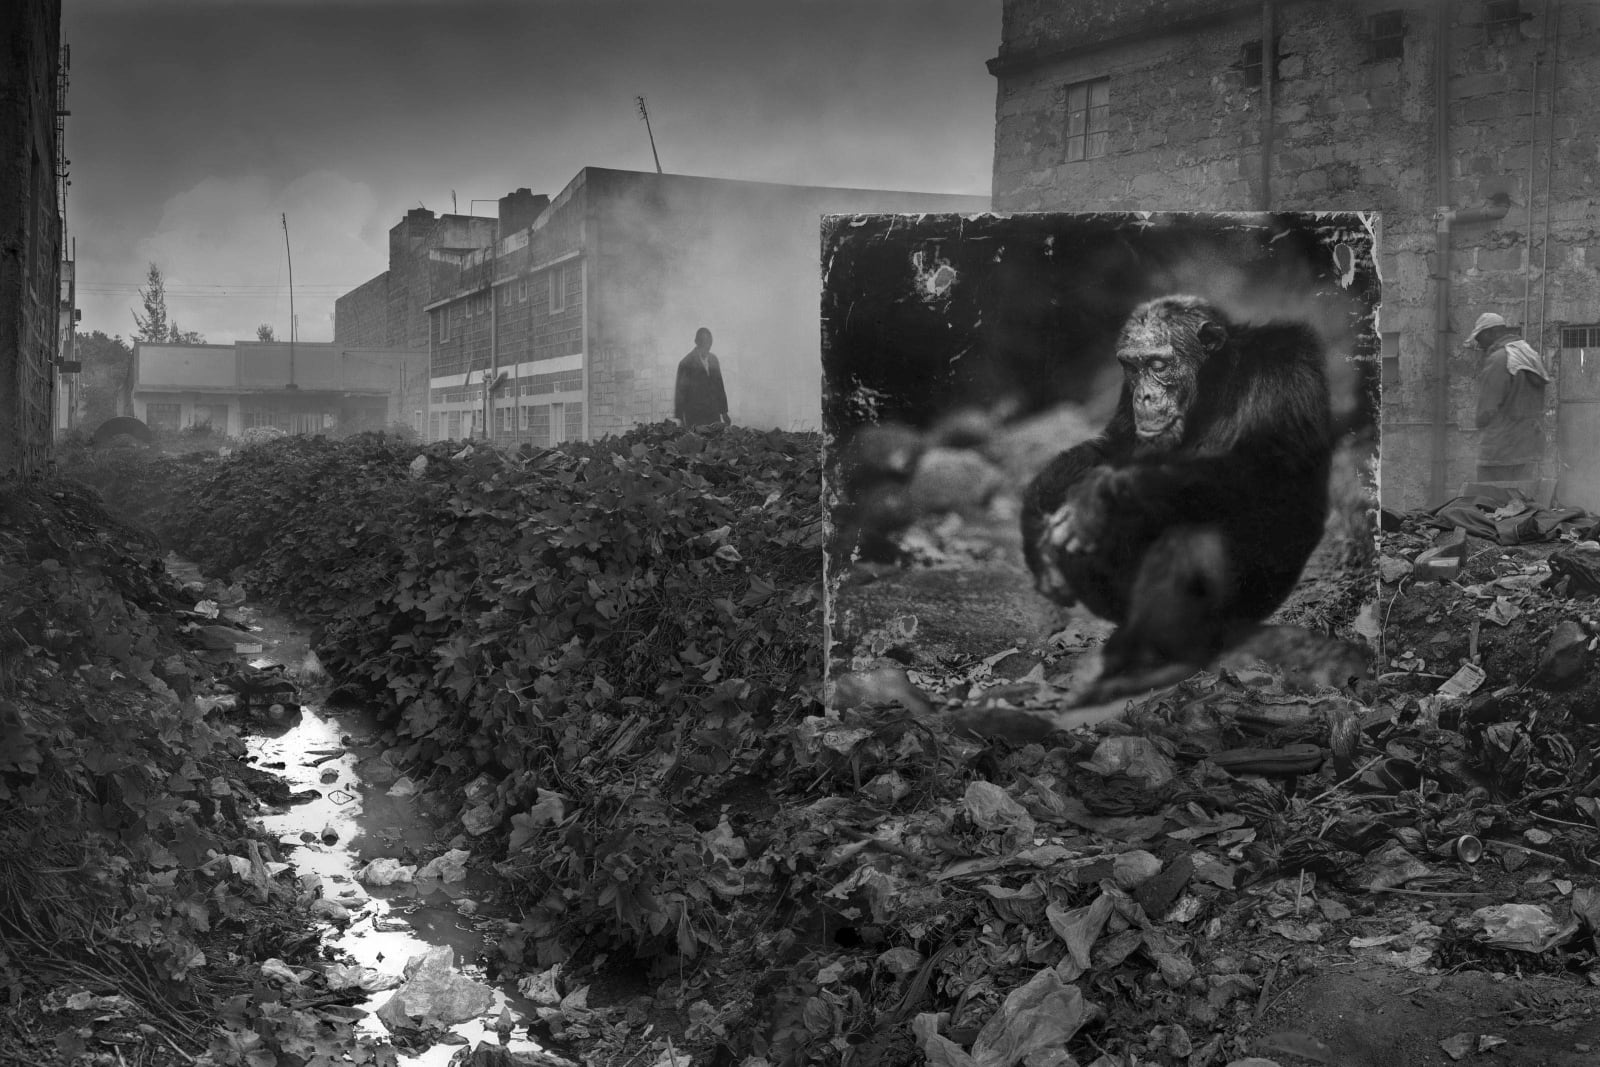 Nick Brandt, Alleyway with Chimpanzee, 2014